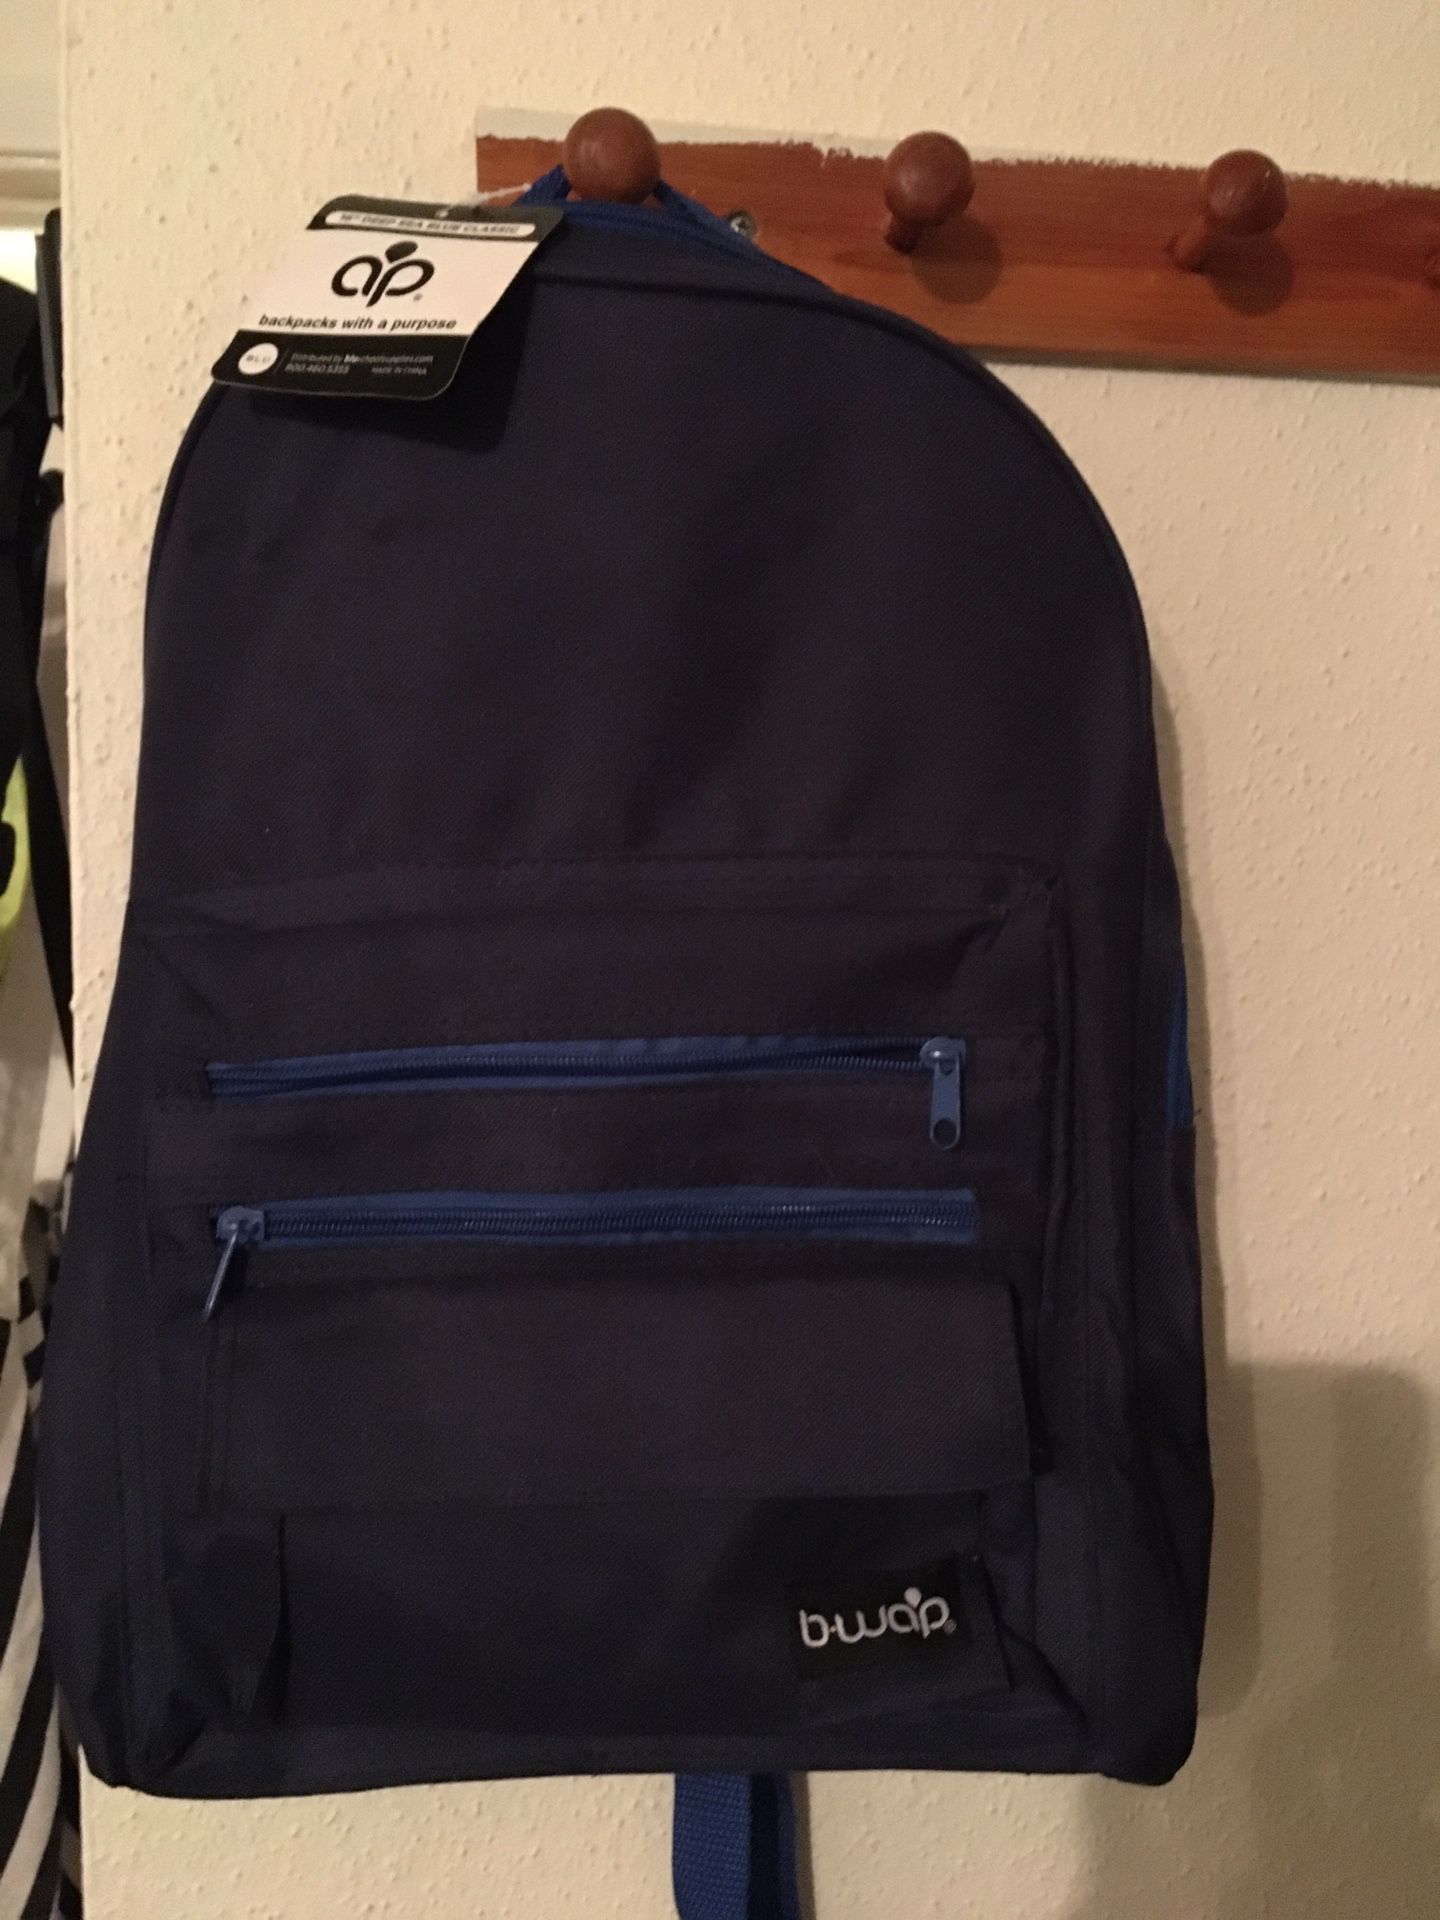 New backpack blue